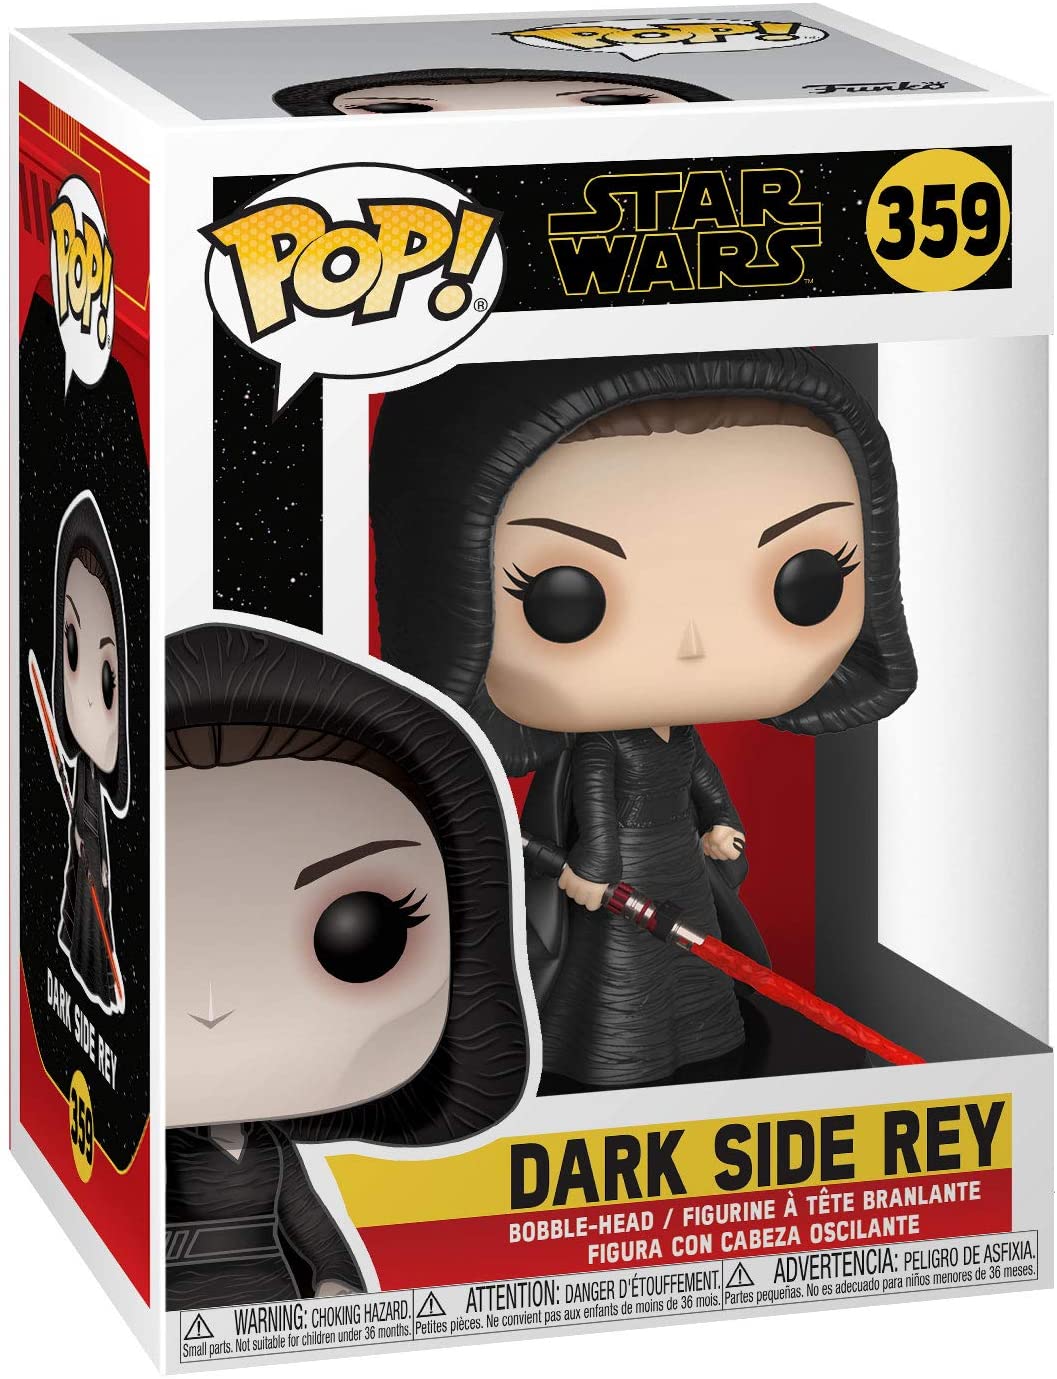 Star Wars Dark Side Rey Funko 47989 Pop! Vinilo n. ° 359